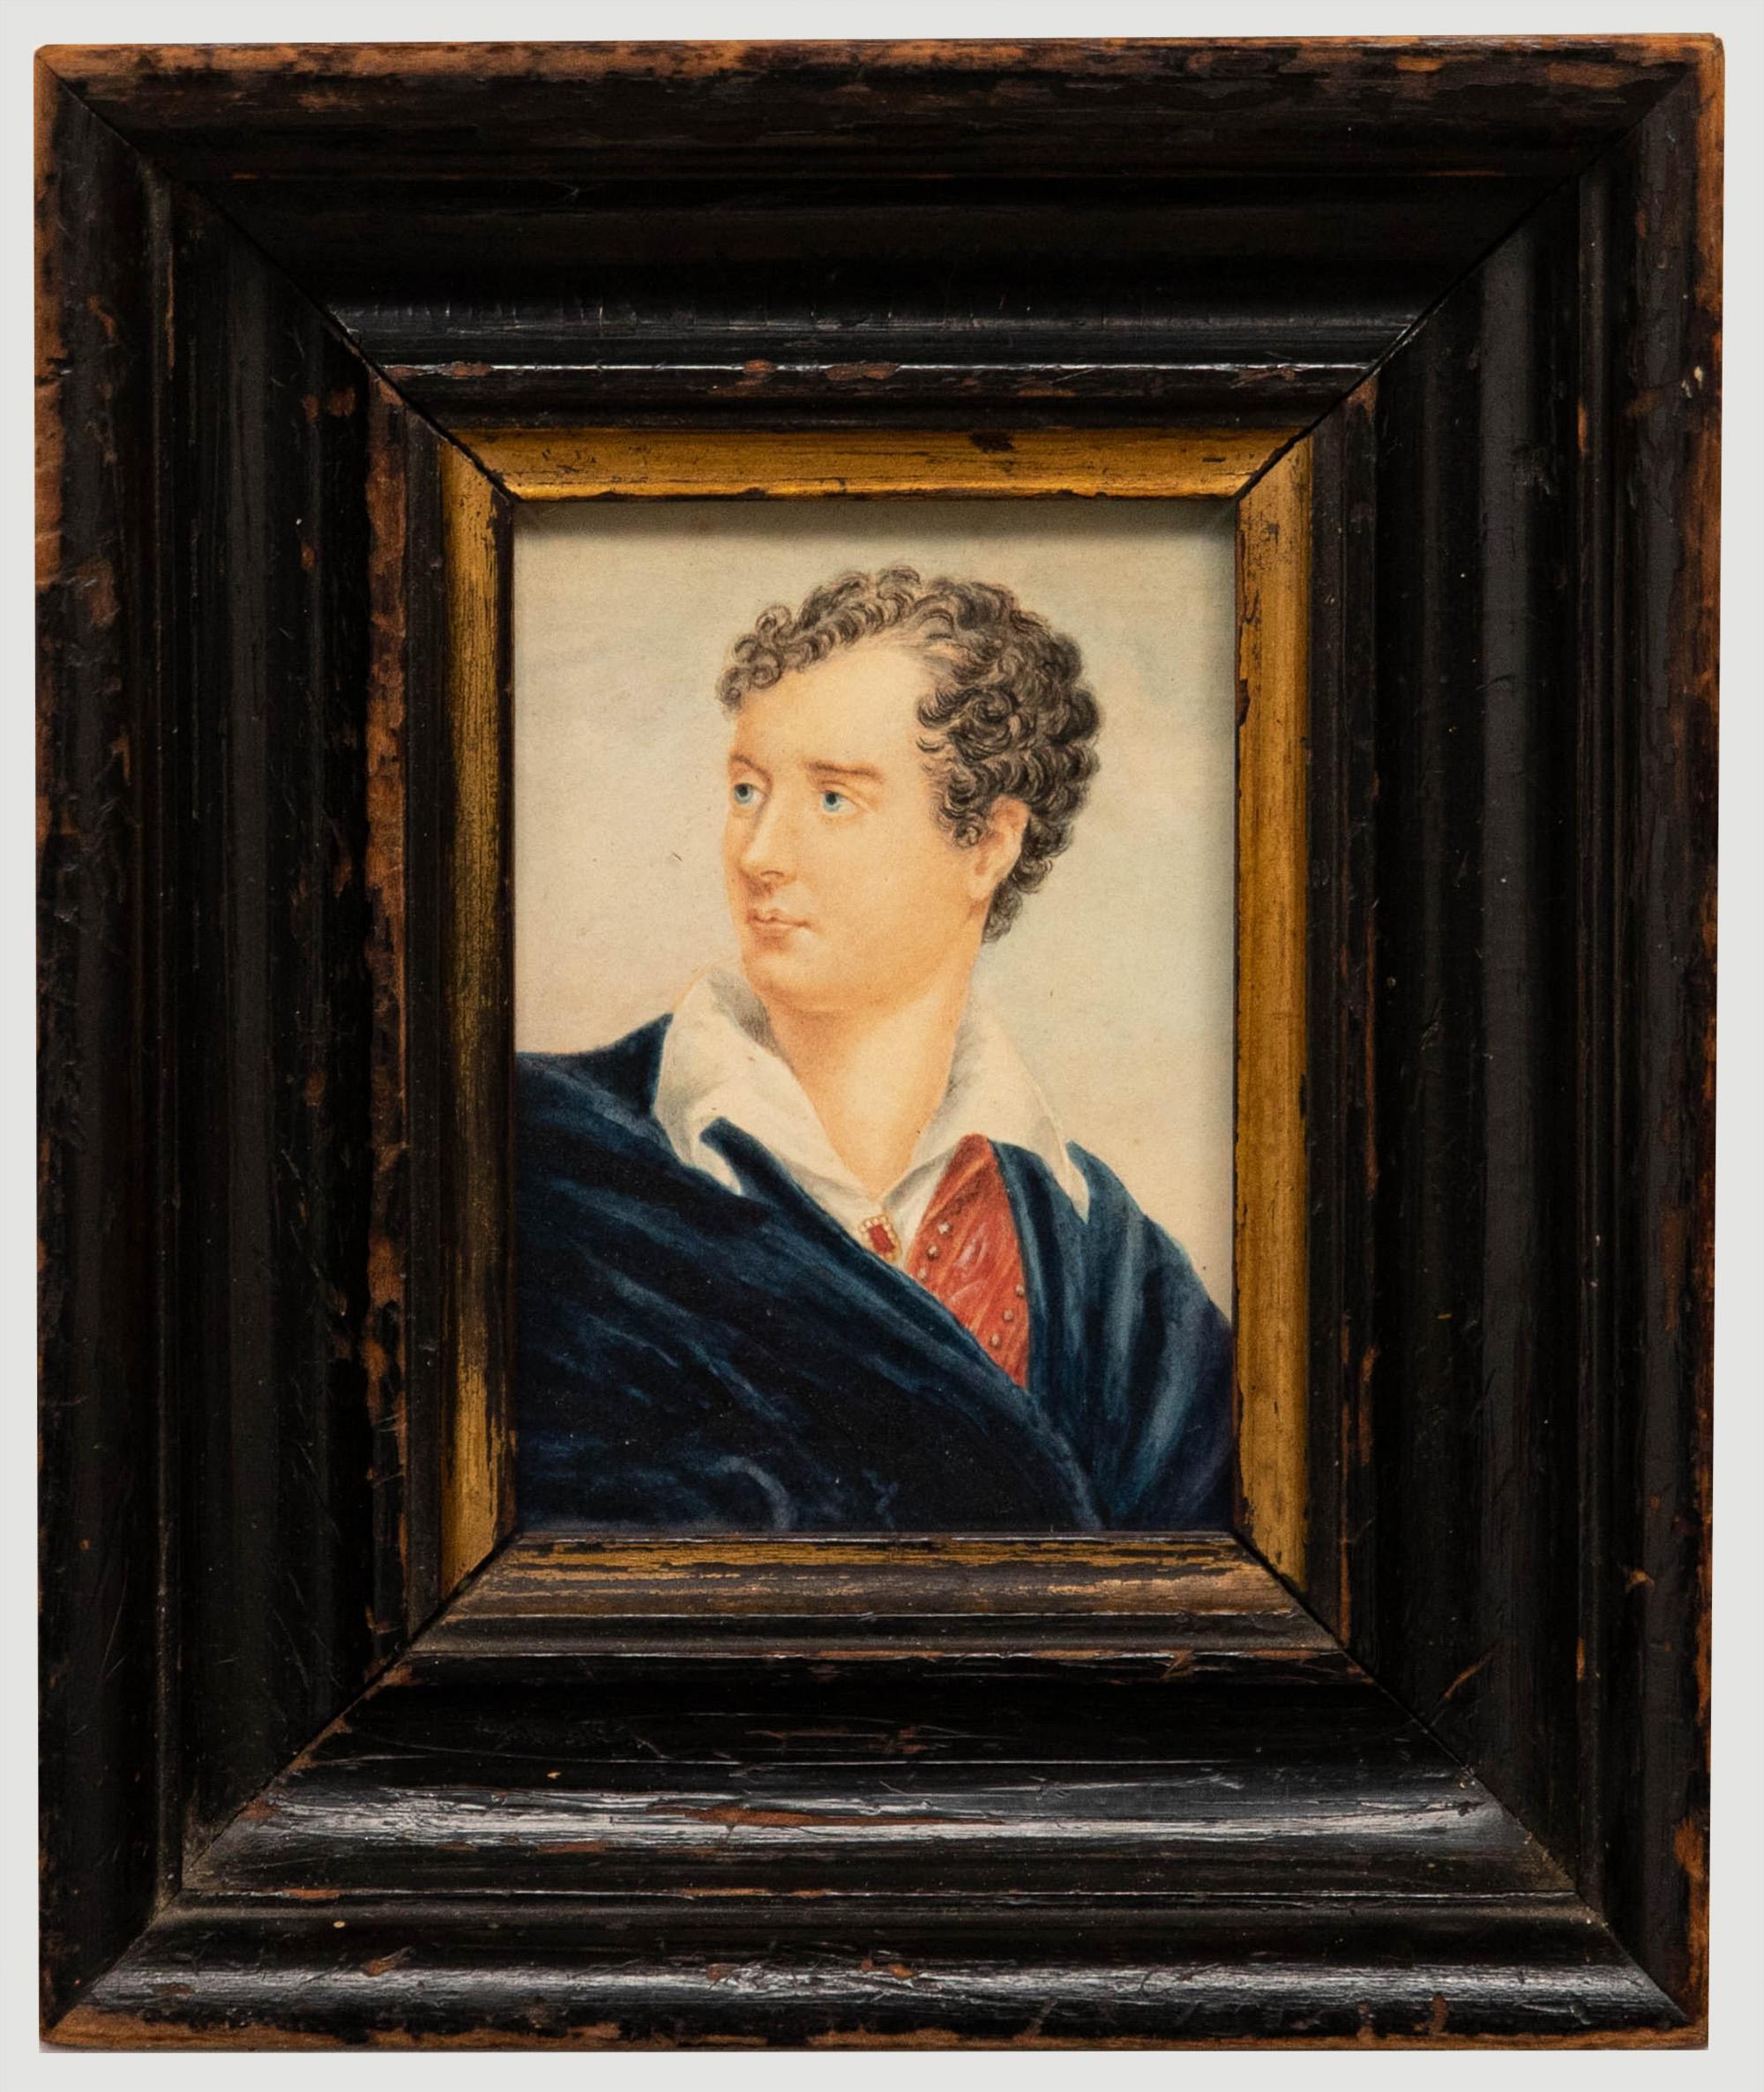 Unknown Portrait - 19th Century Watercolour - Lord Byron